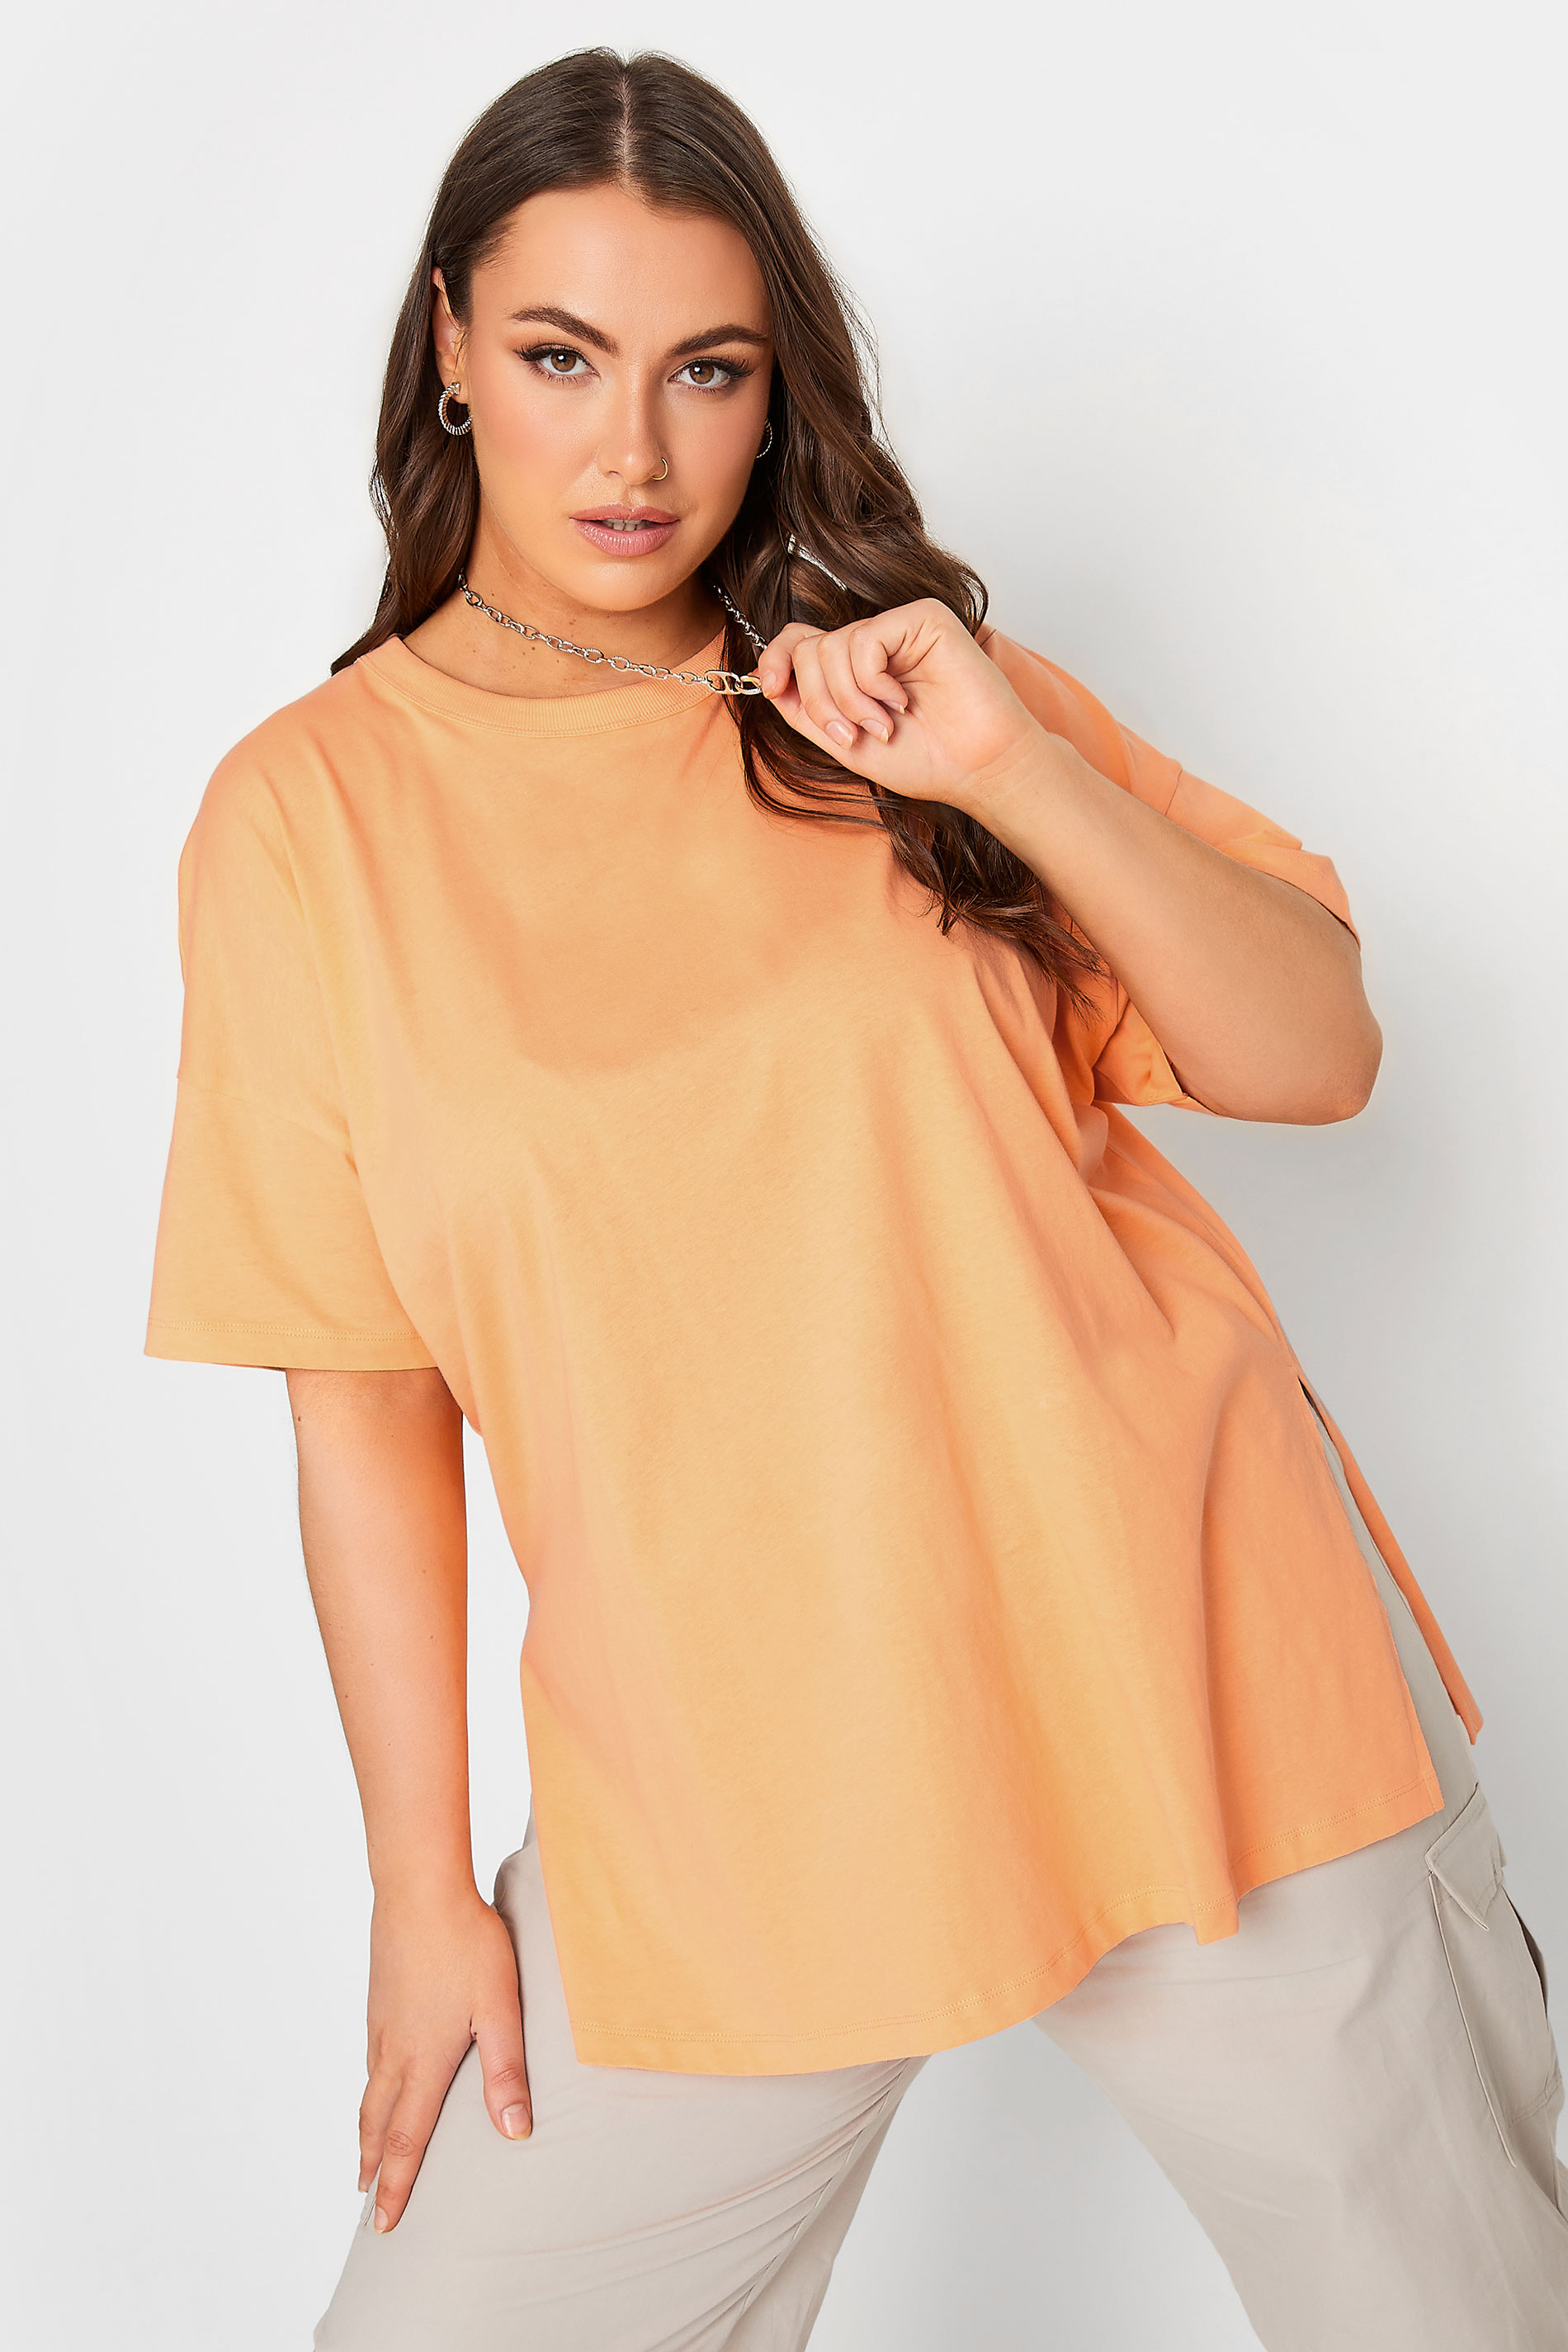 large uniqlo peach/orange tshirt, can fit an - Depop